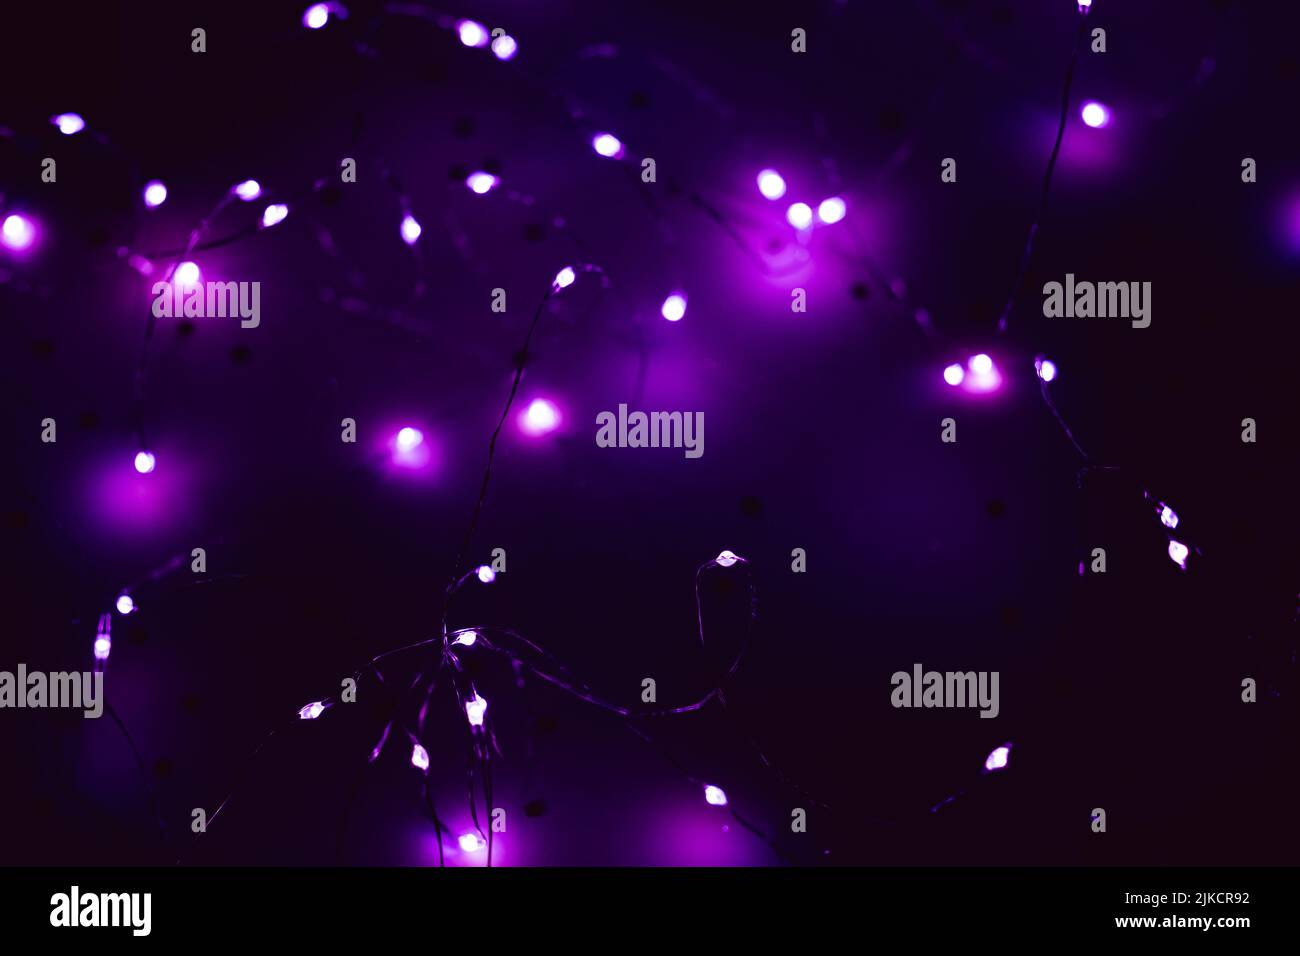 cold white led string lights defocused purple glow Stock Photo